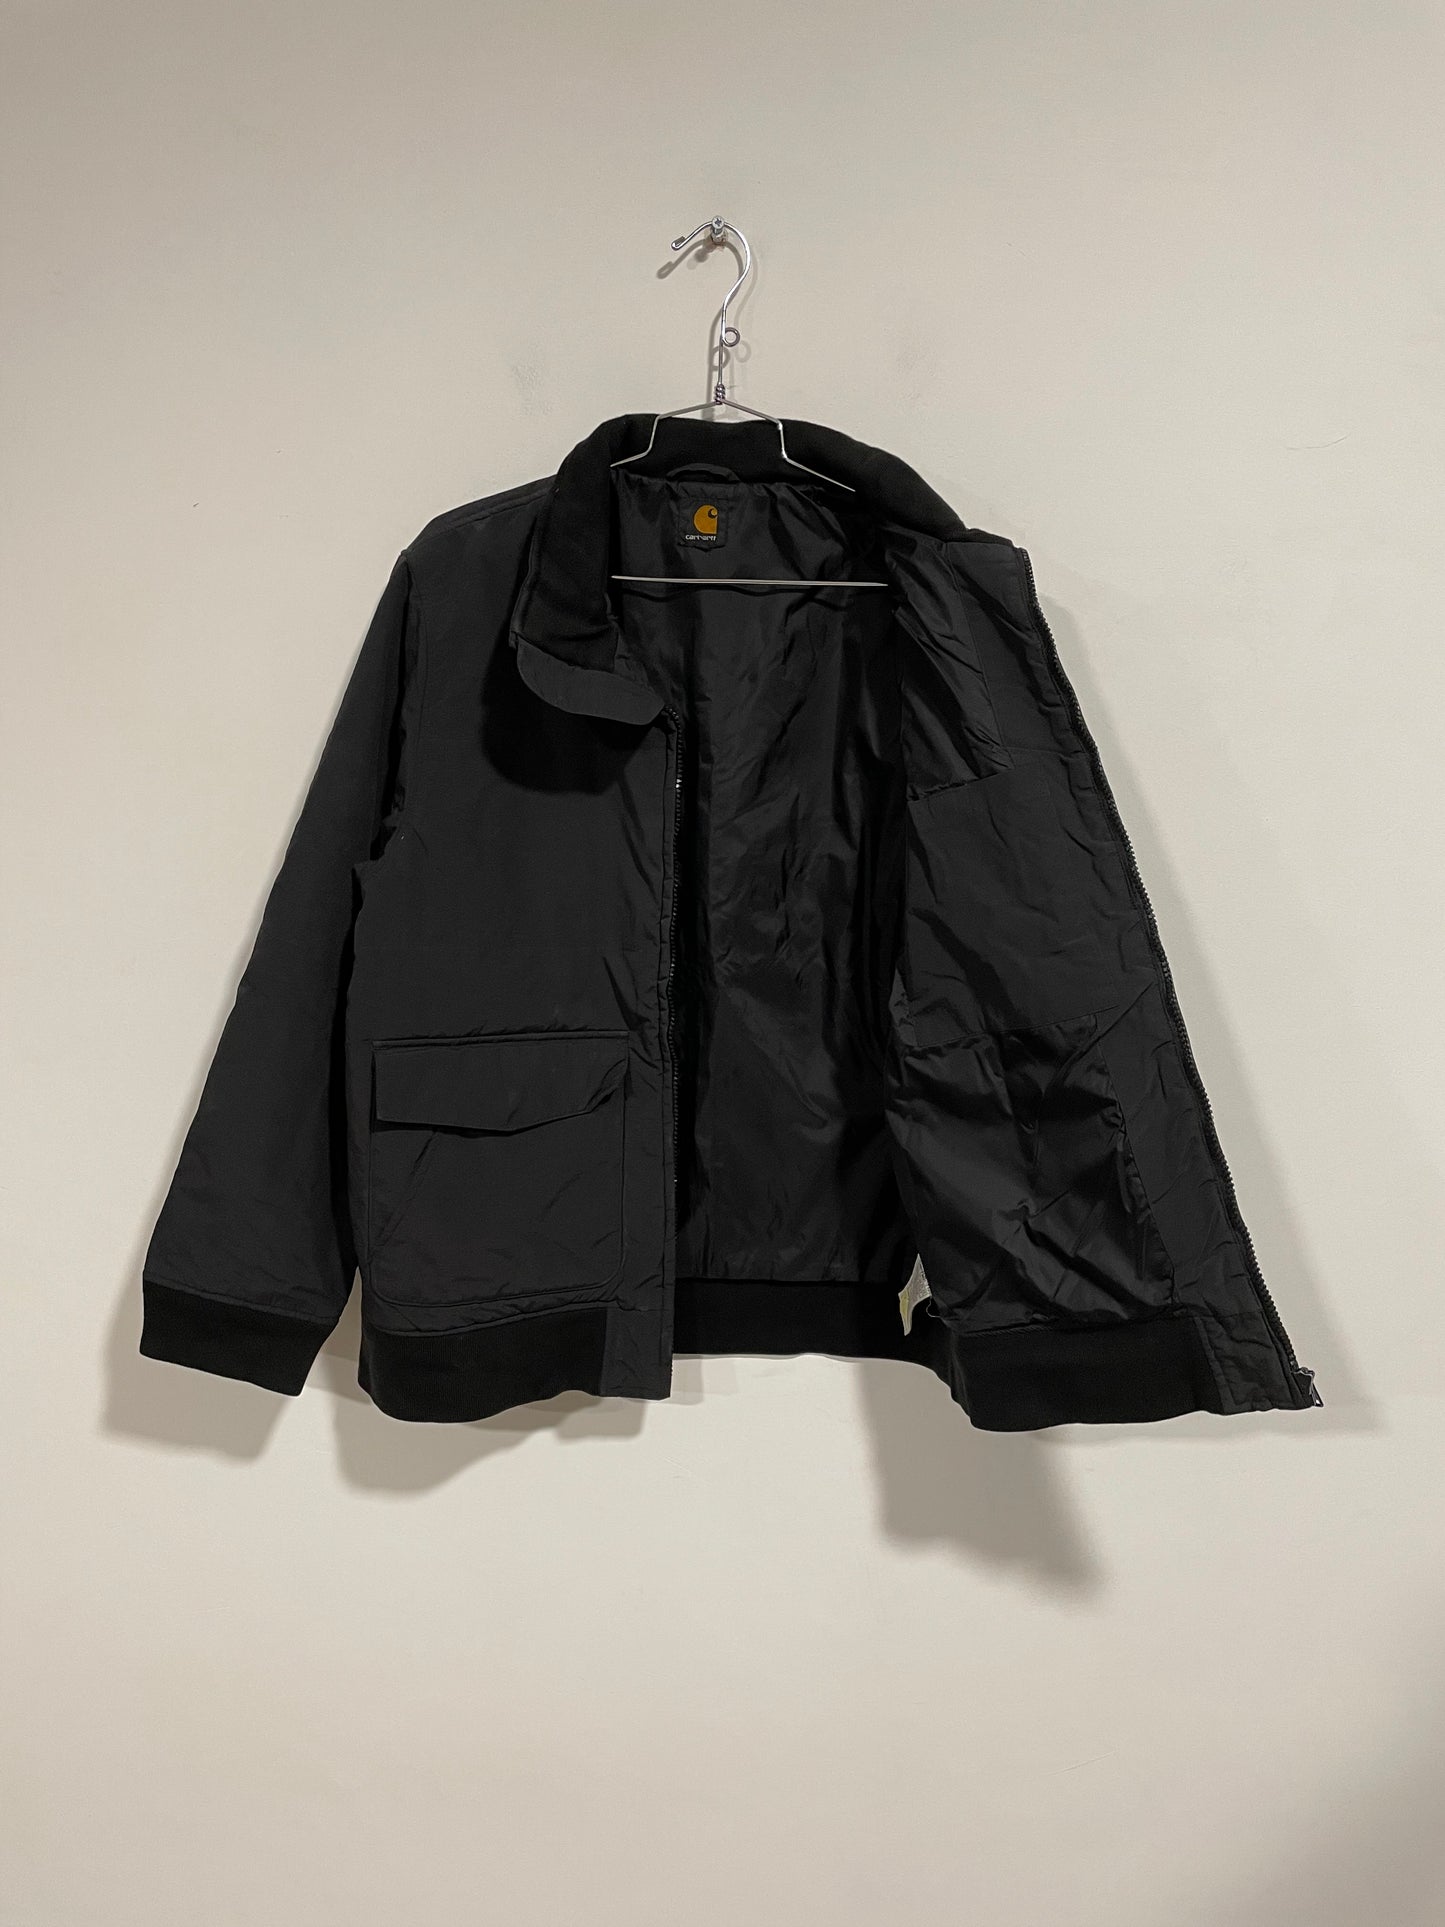 Giubbotto Carhartt brooks jacket (D093)